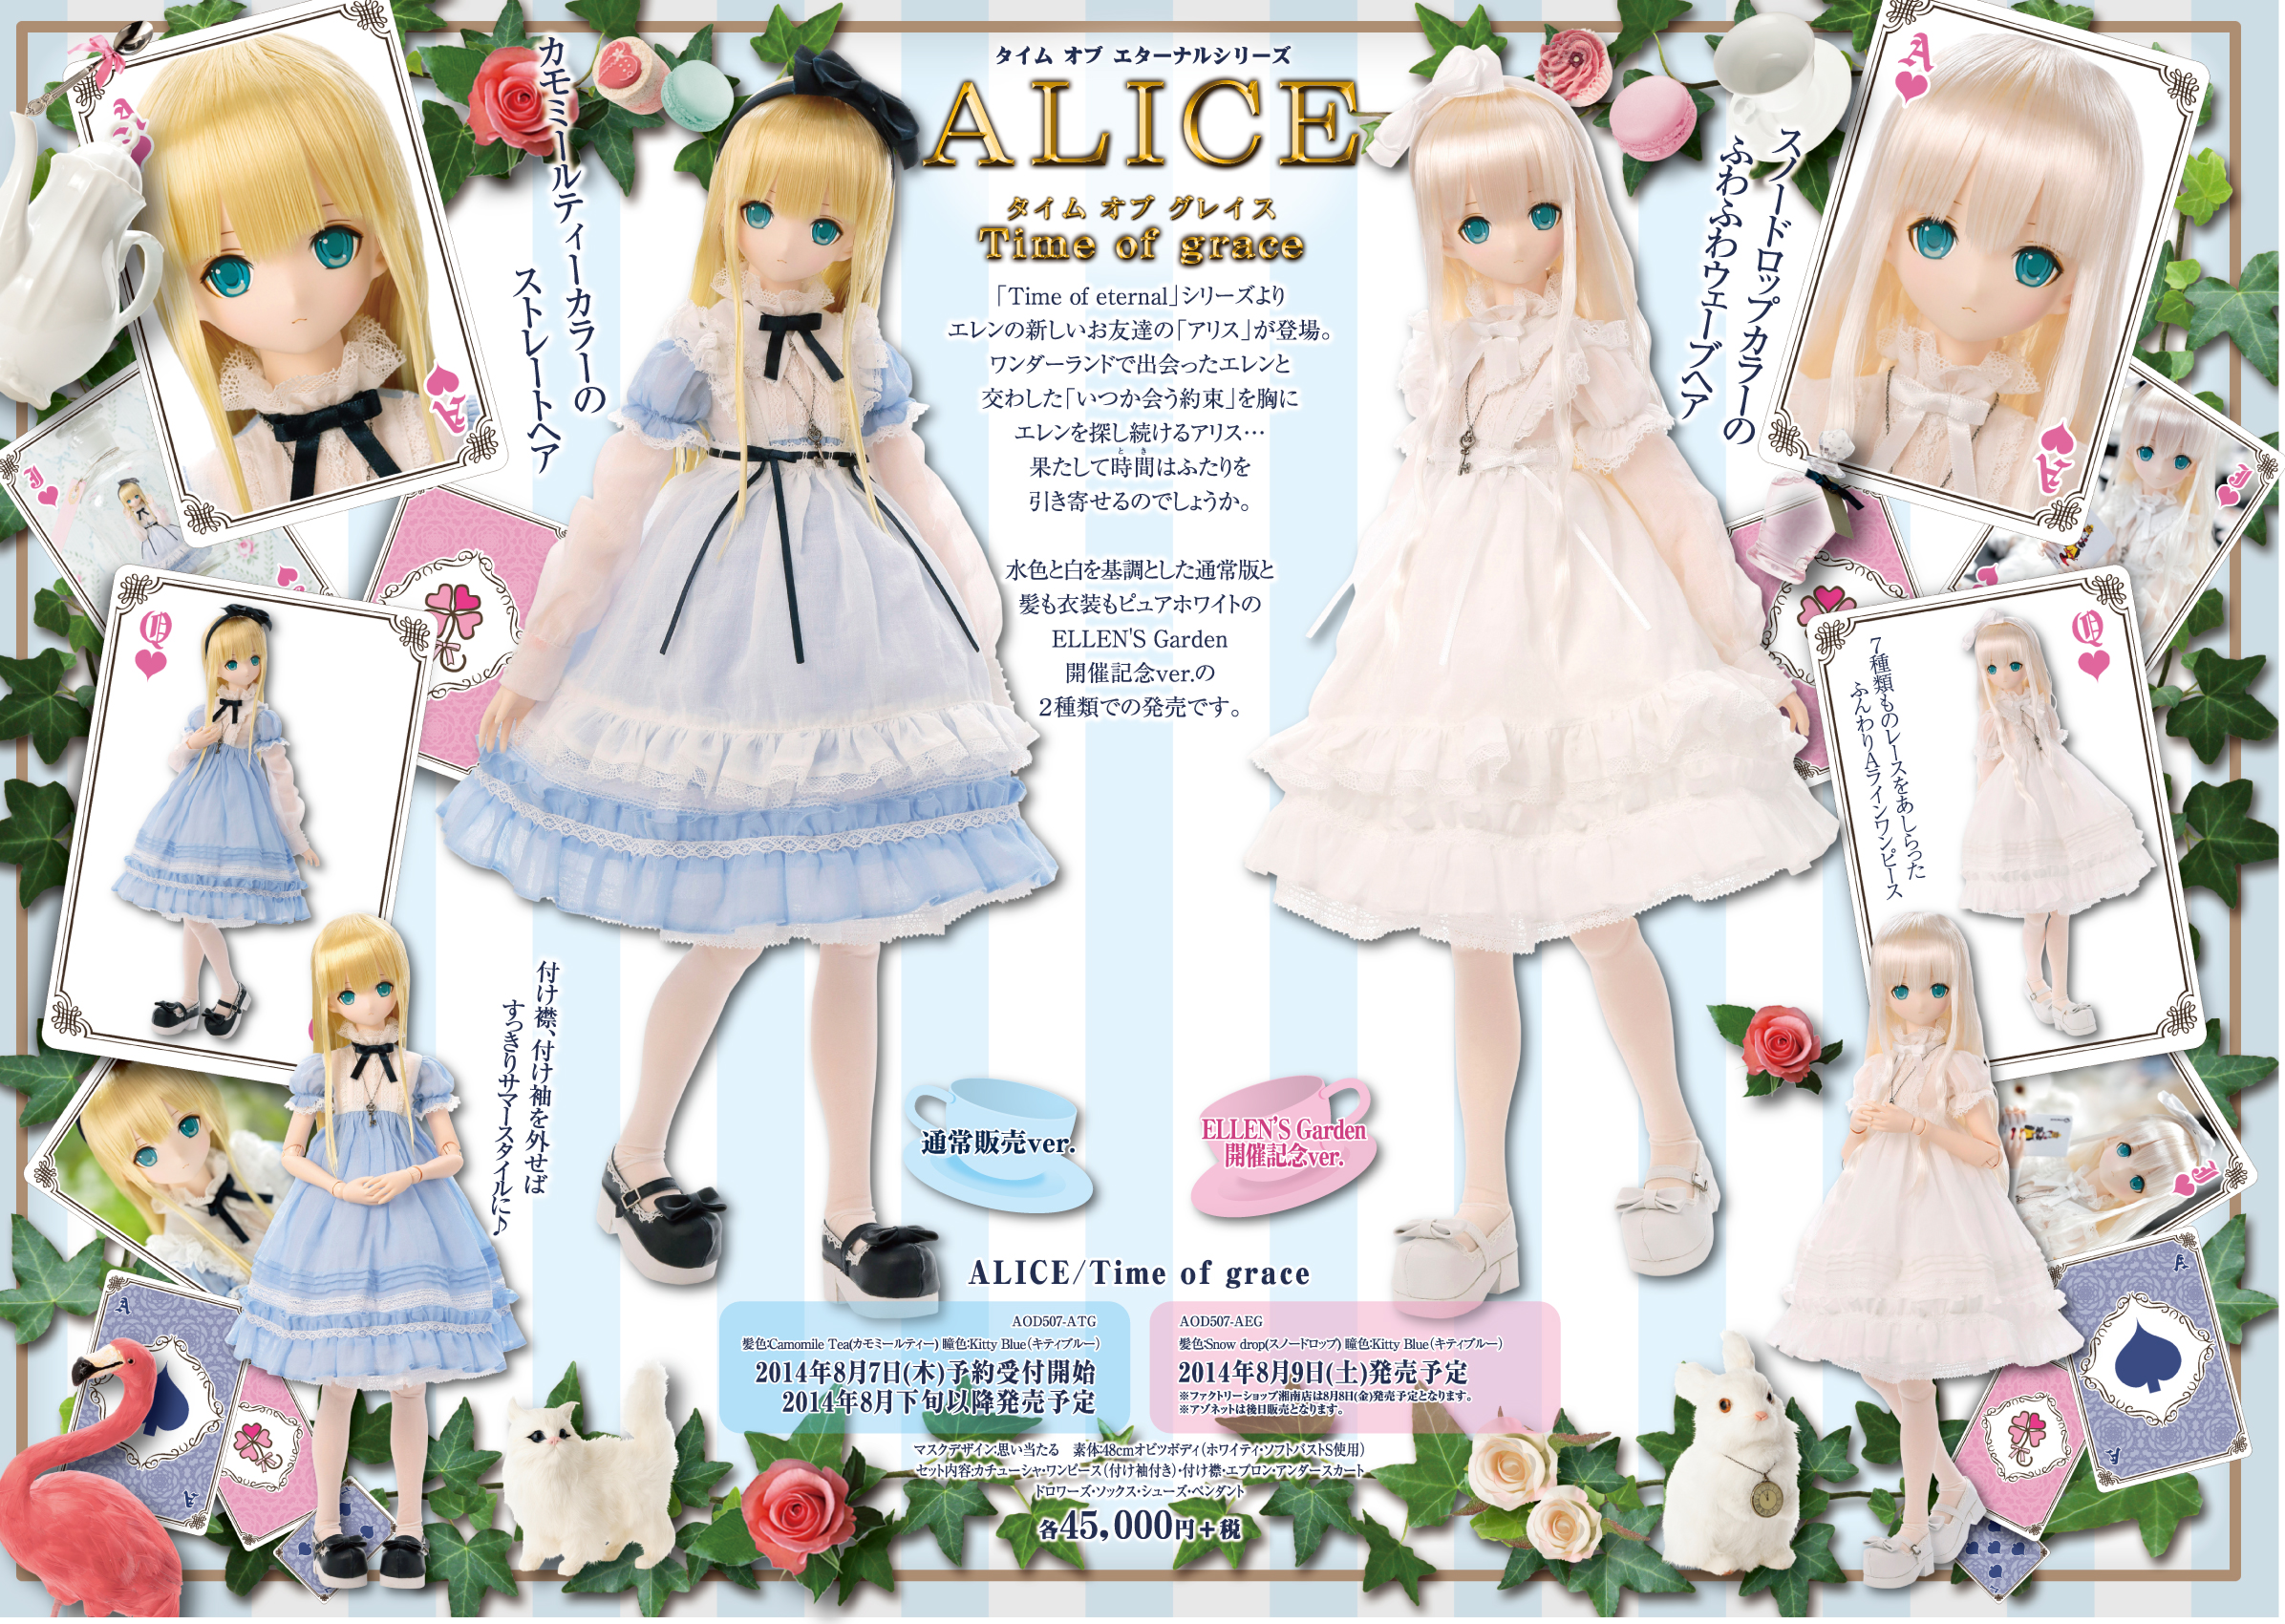 Alice/Time of ｇrace